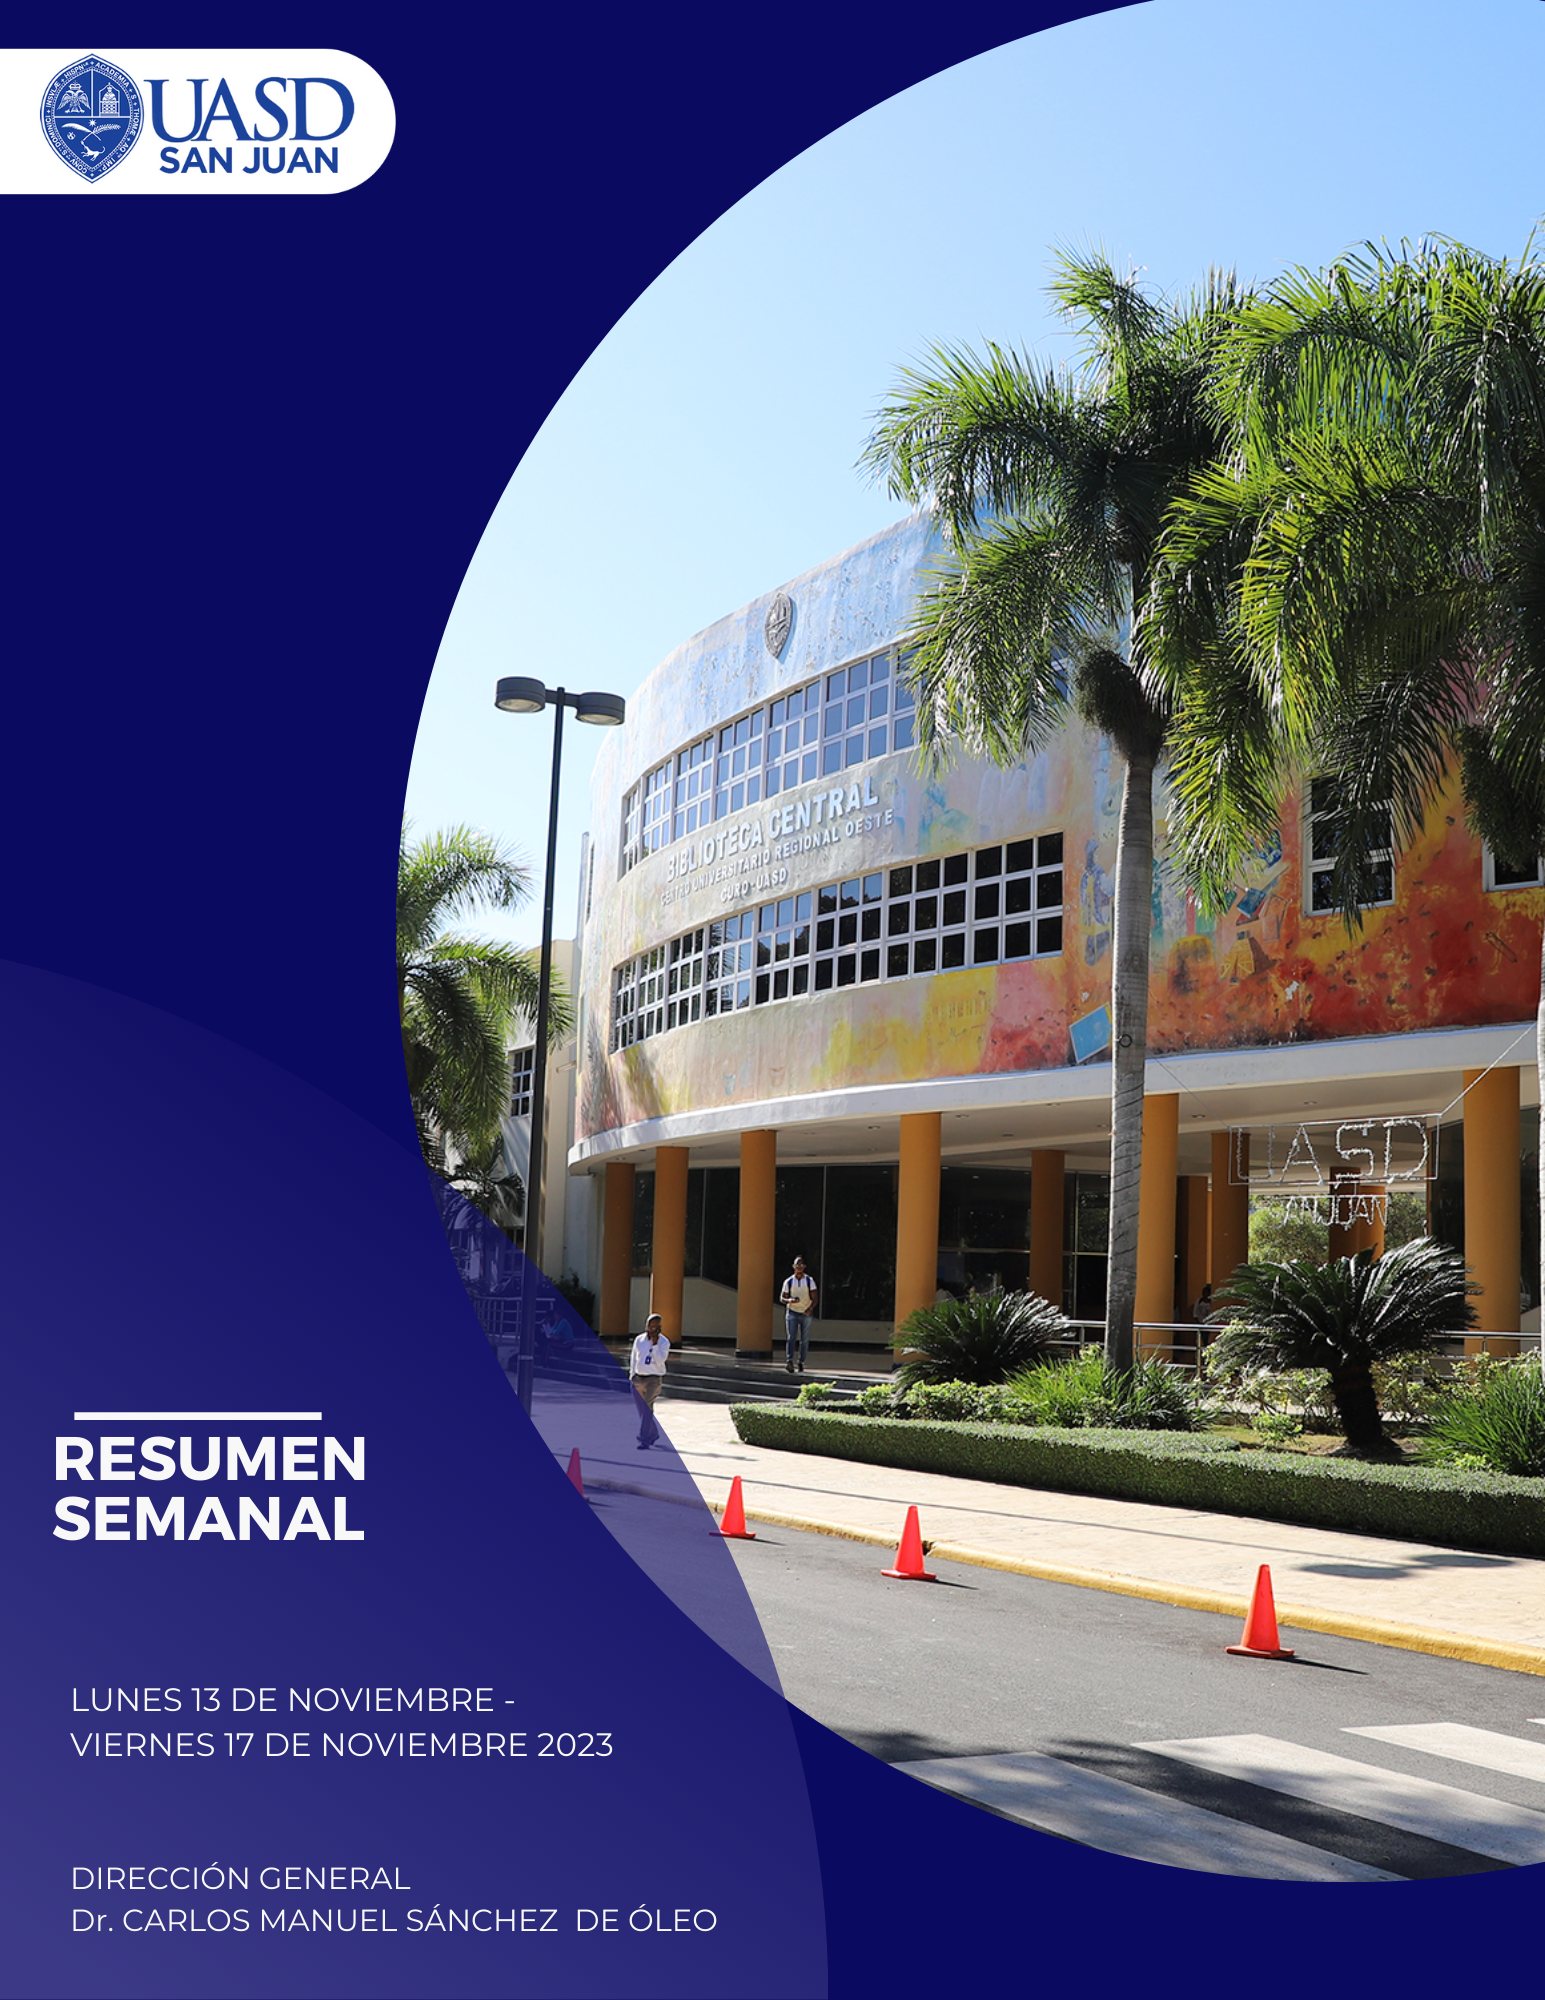 UASD Recinto San Juan, Resumen Semanal.